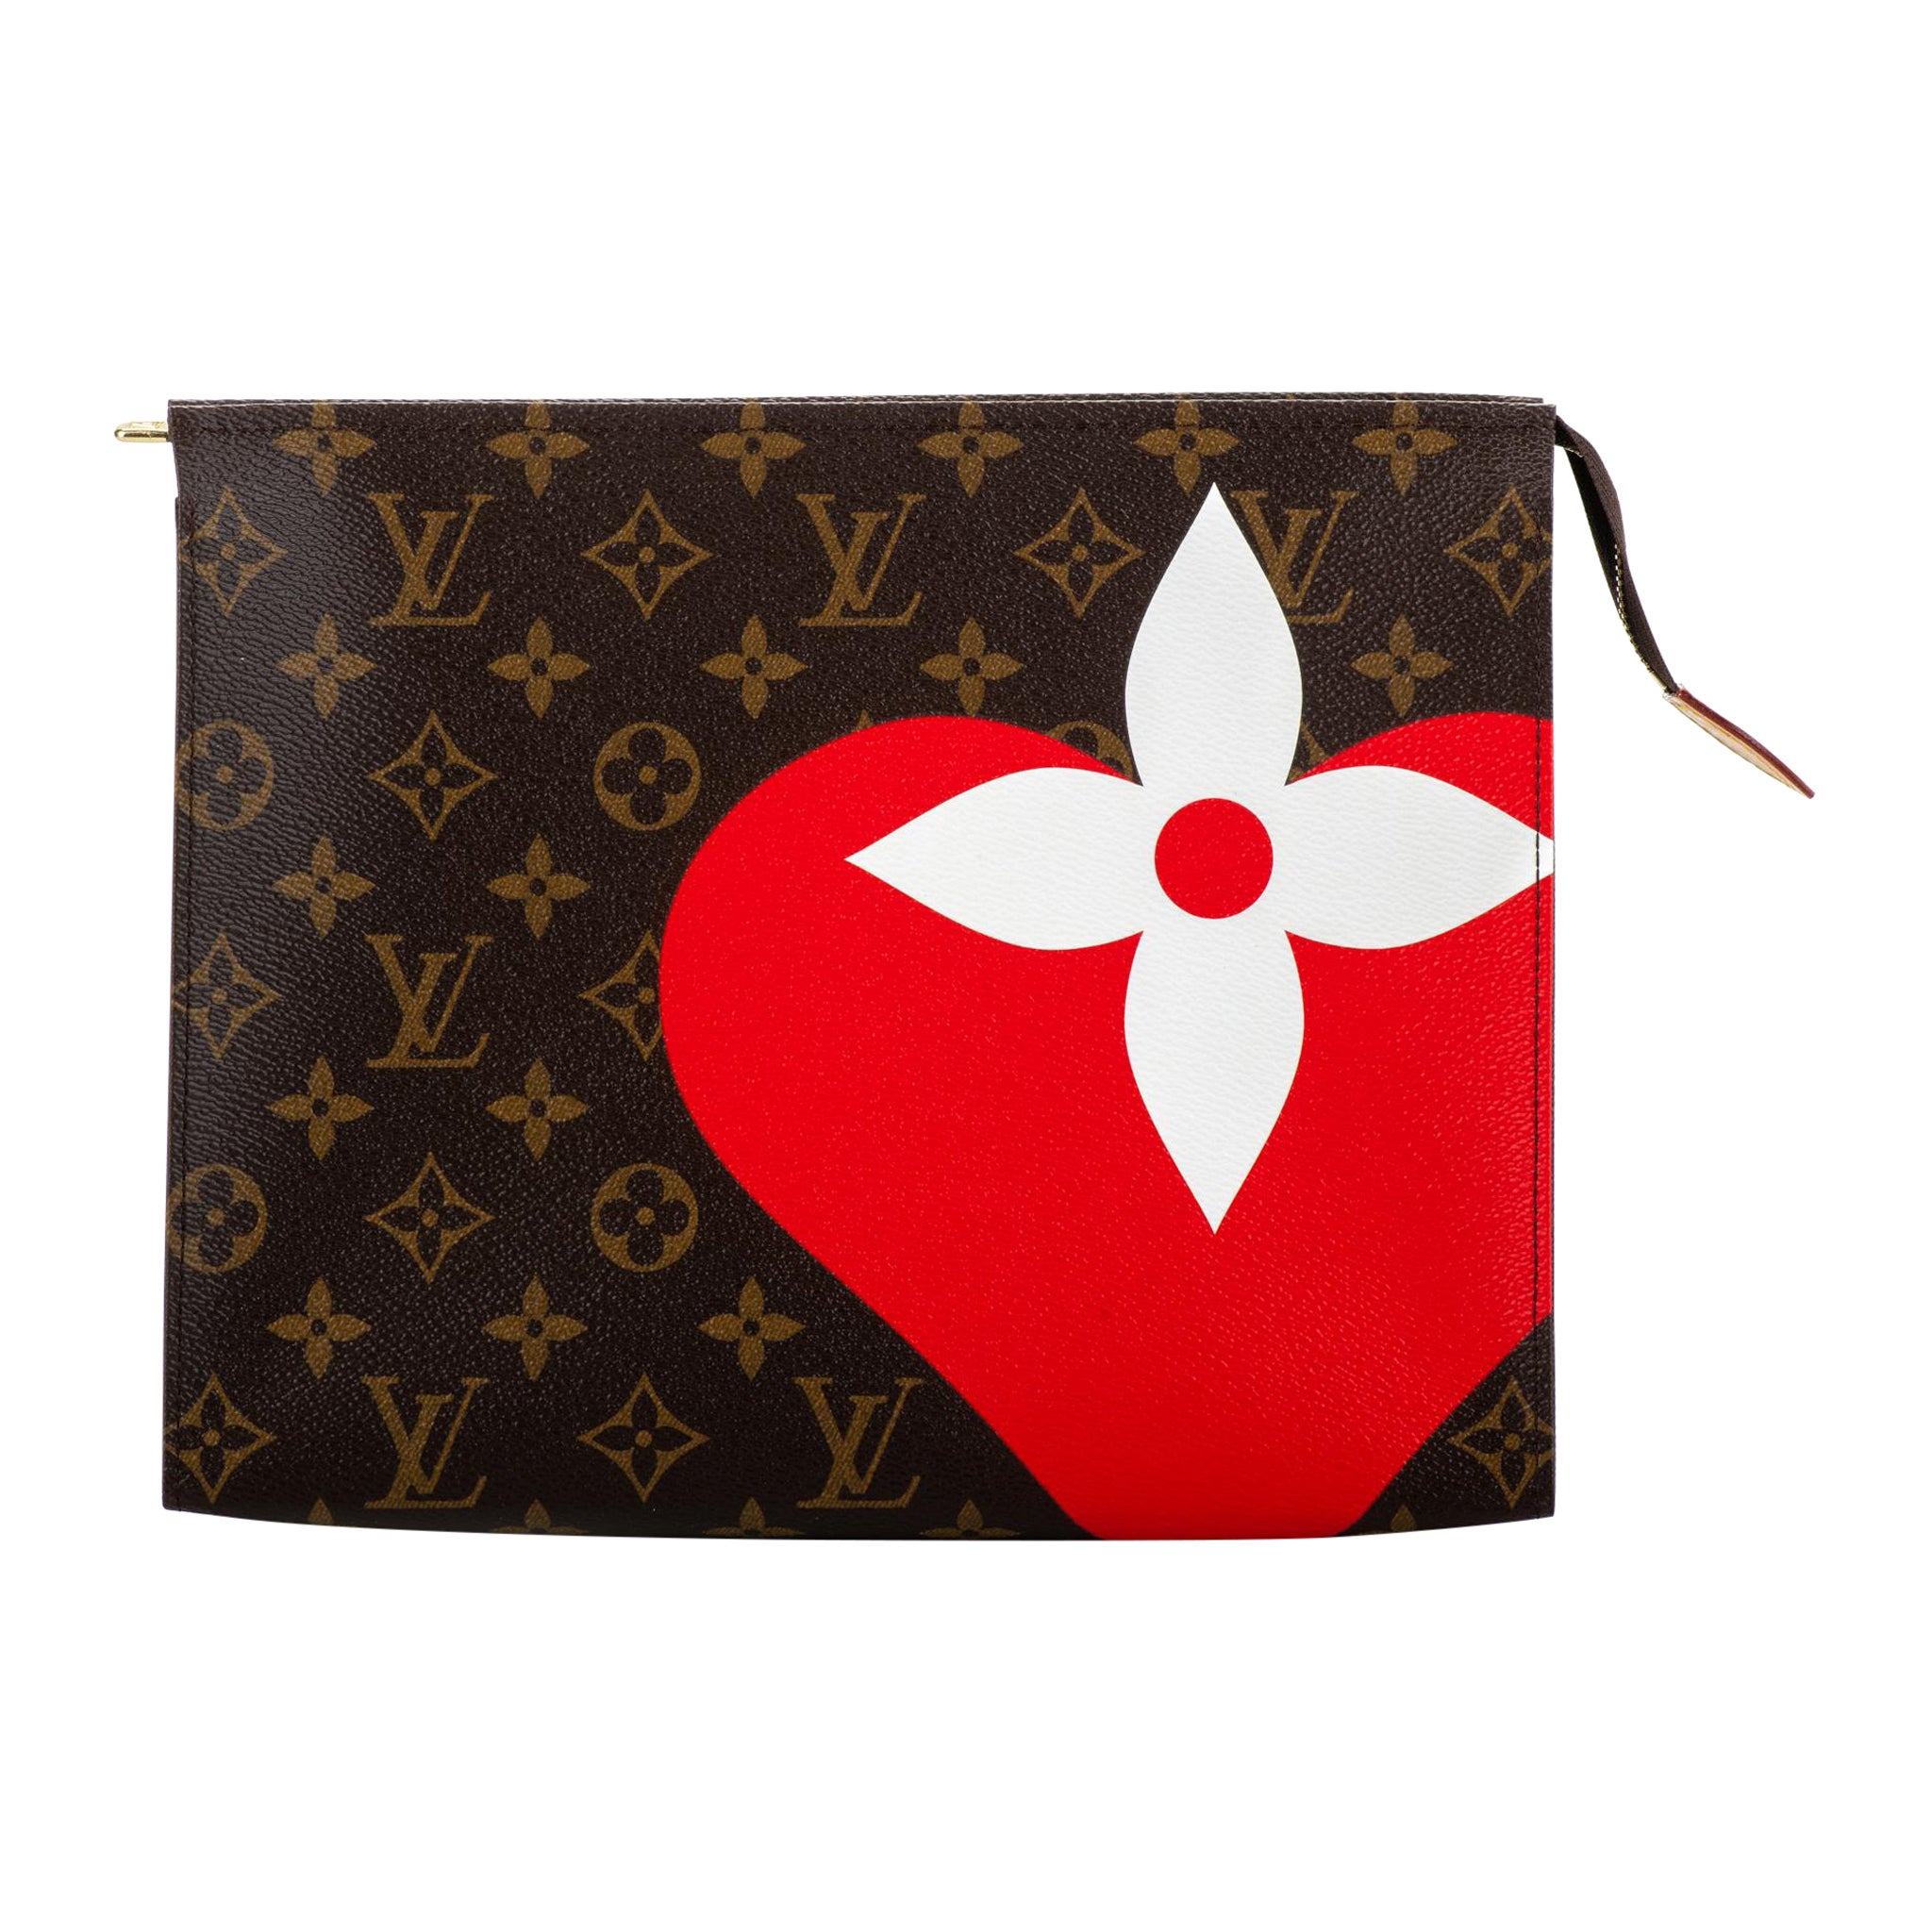 New  Louis Vuitton Limited Edition Heart Monogram Clutch Bag For Sale